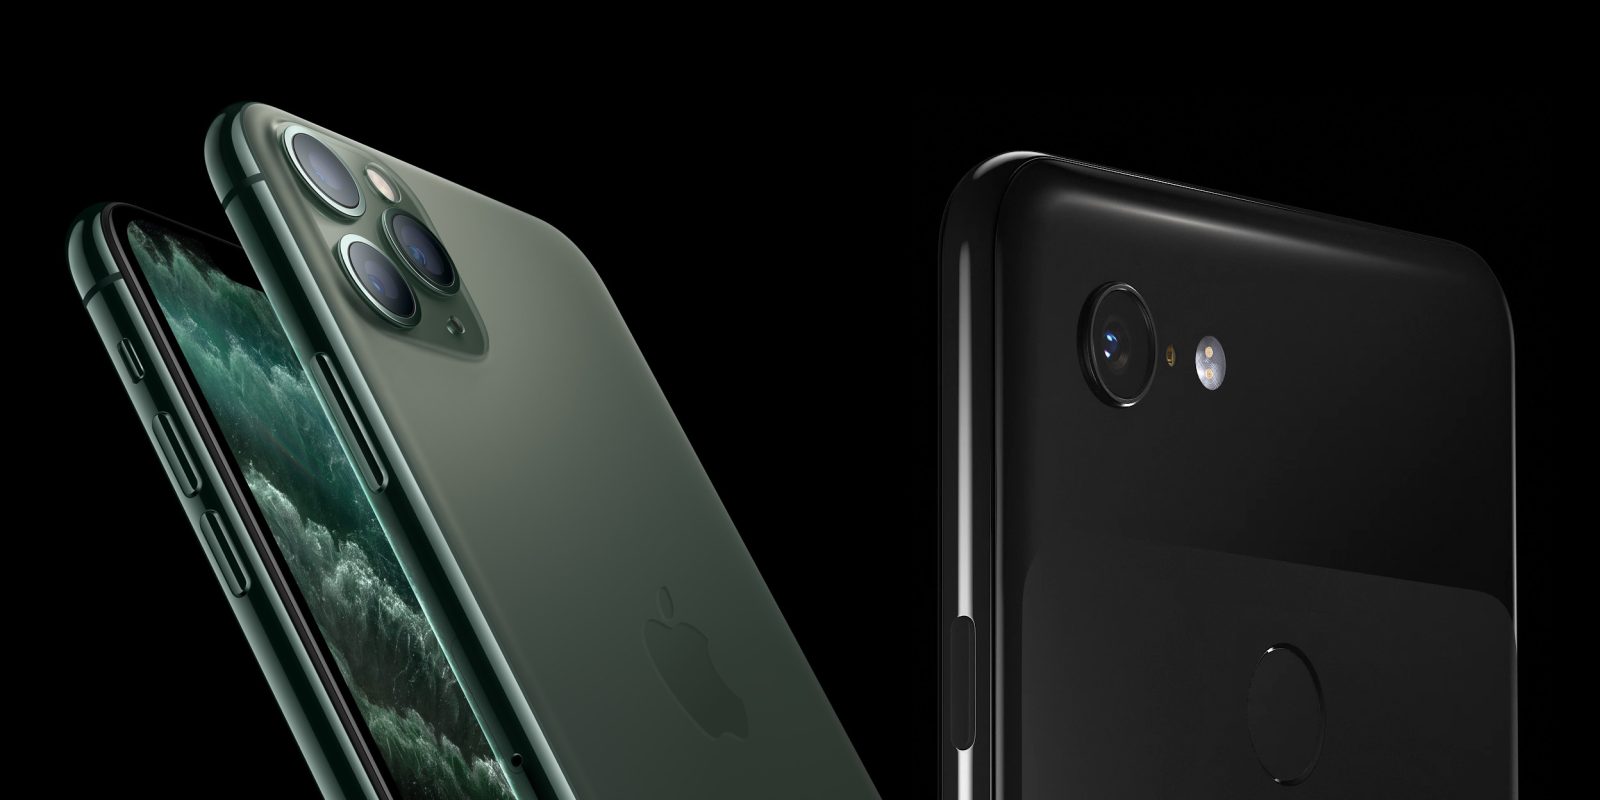 pixel 3 iphone 11 pro camera comparison